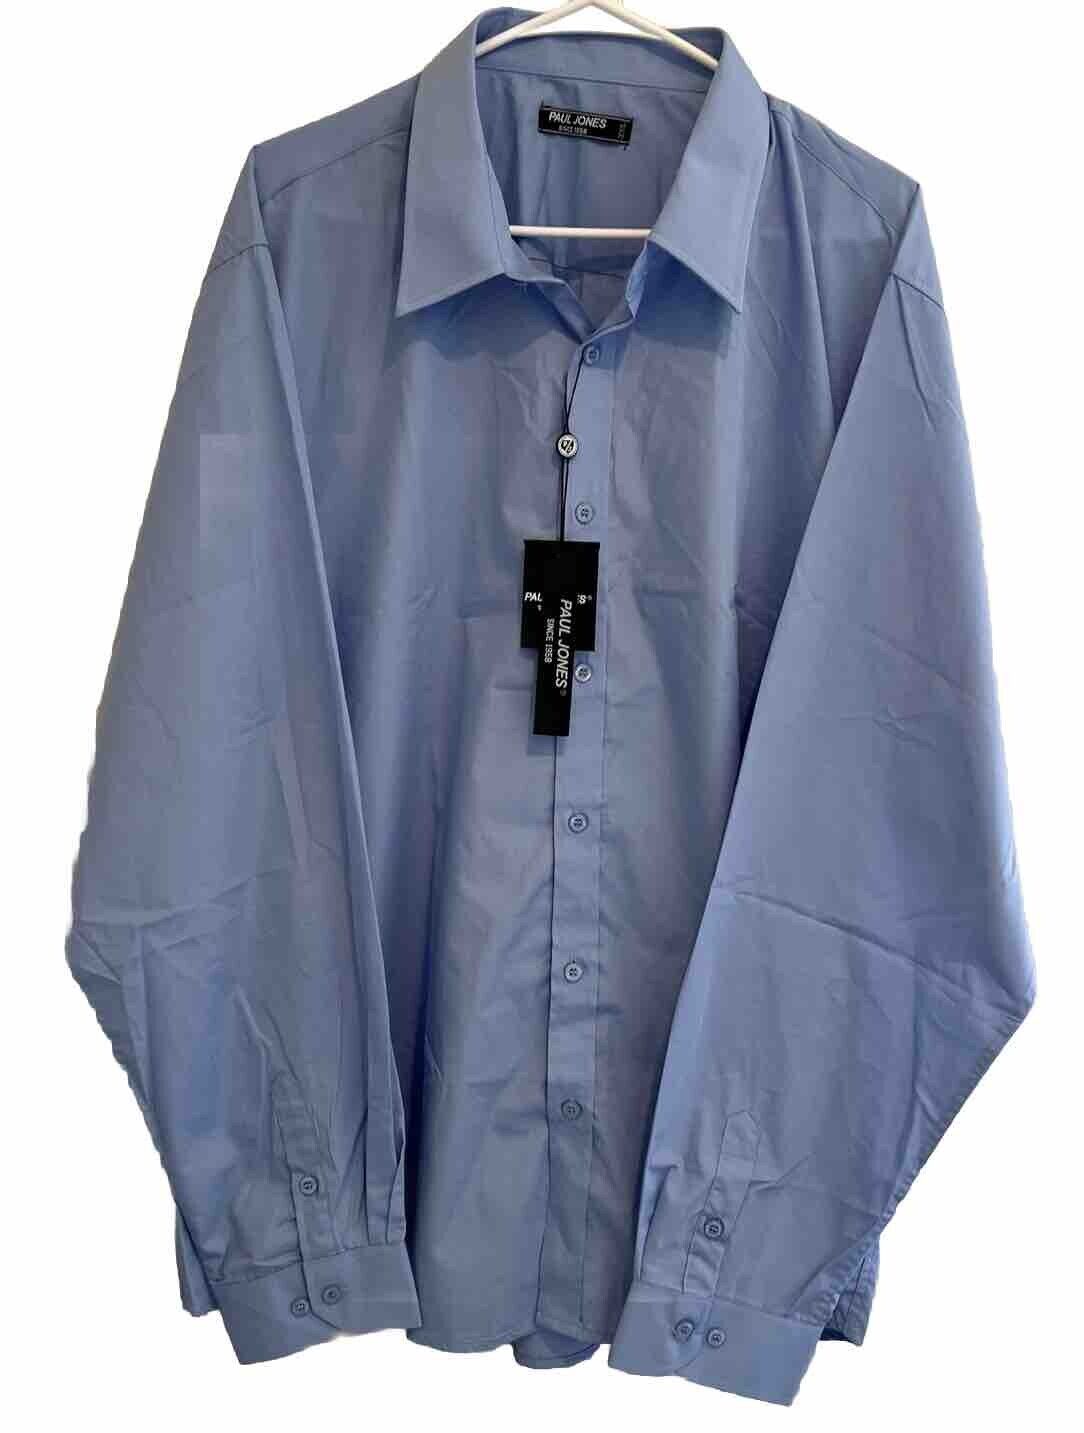 Paul Jones Men's Long Sleeves Button Down Dress Shirt 3X Blue New W Tags